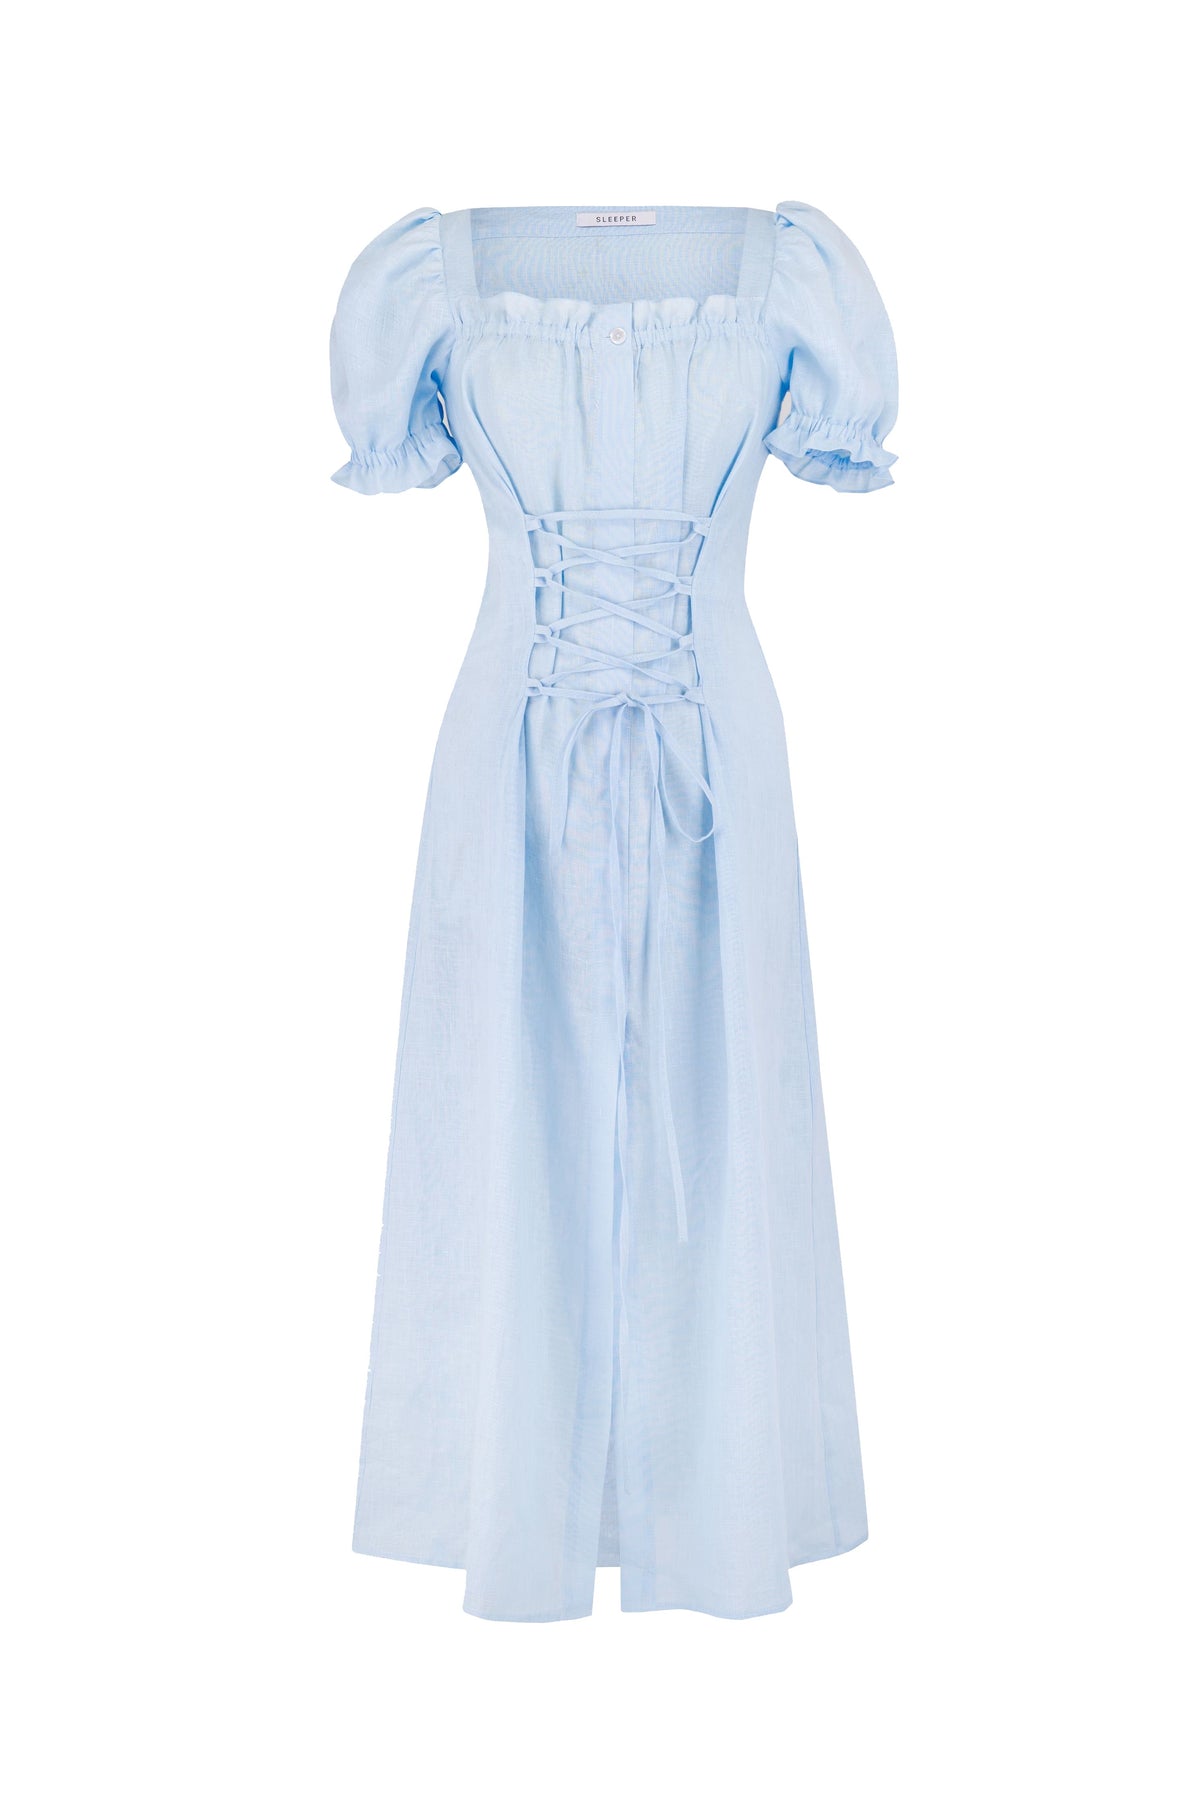 Marquise Linen Dress in Azure Blue